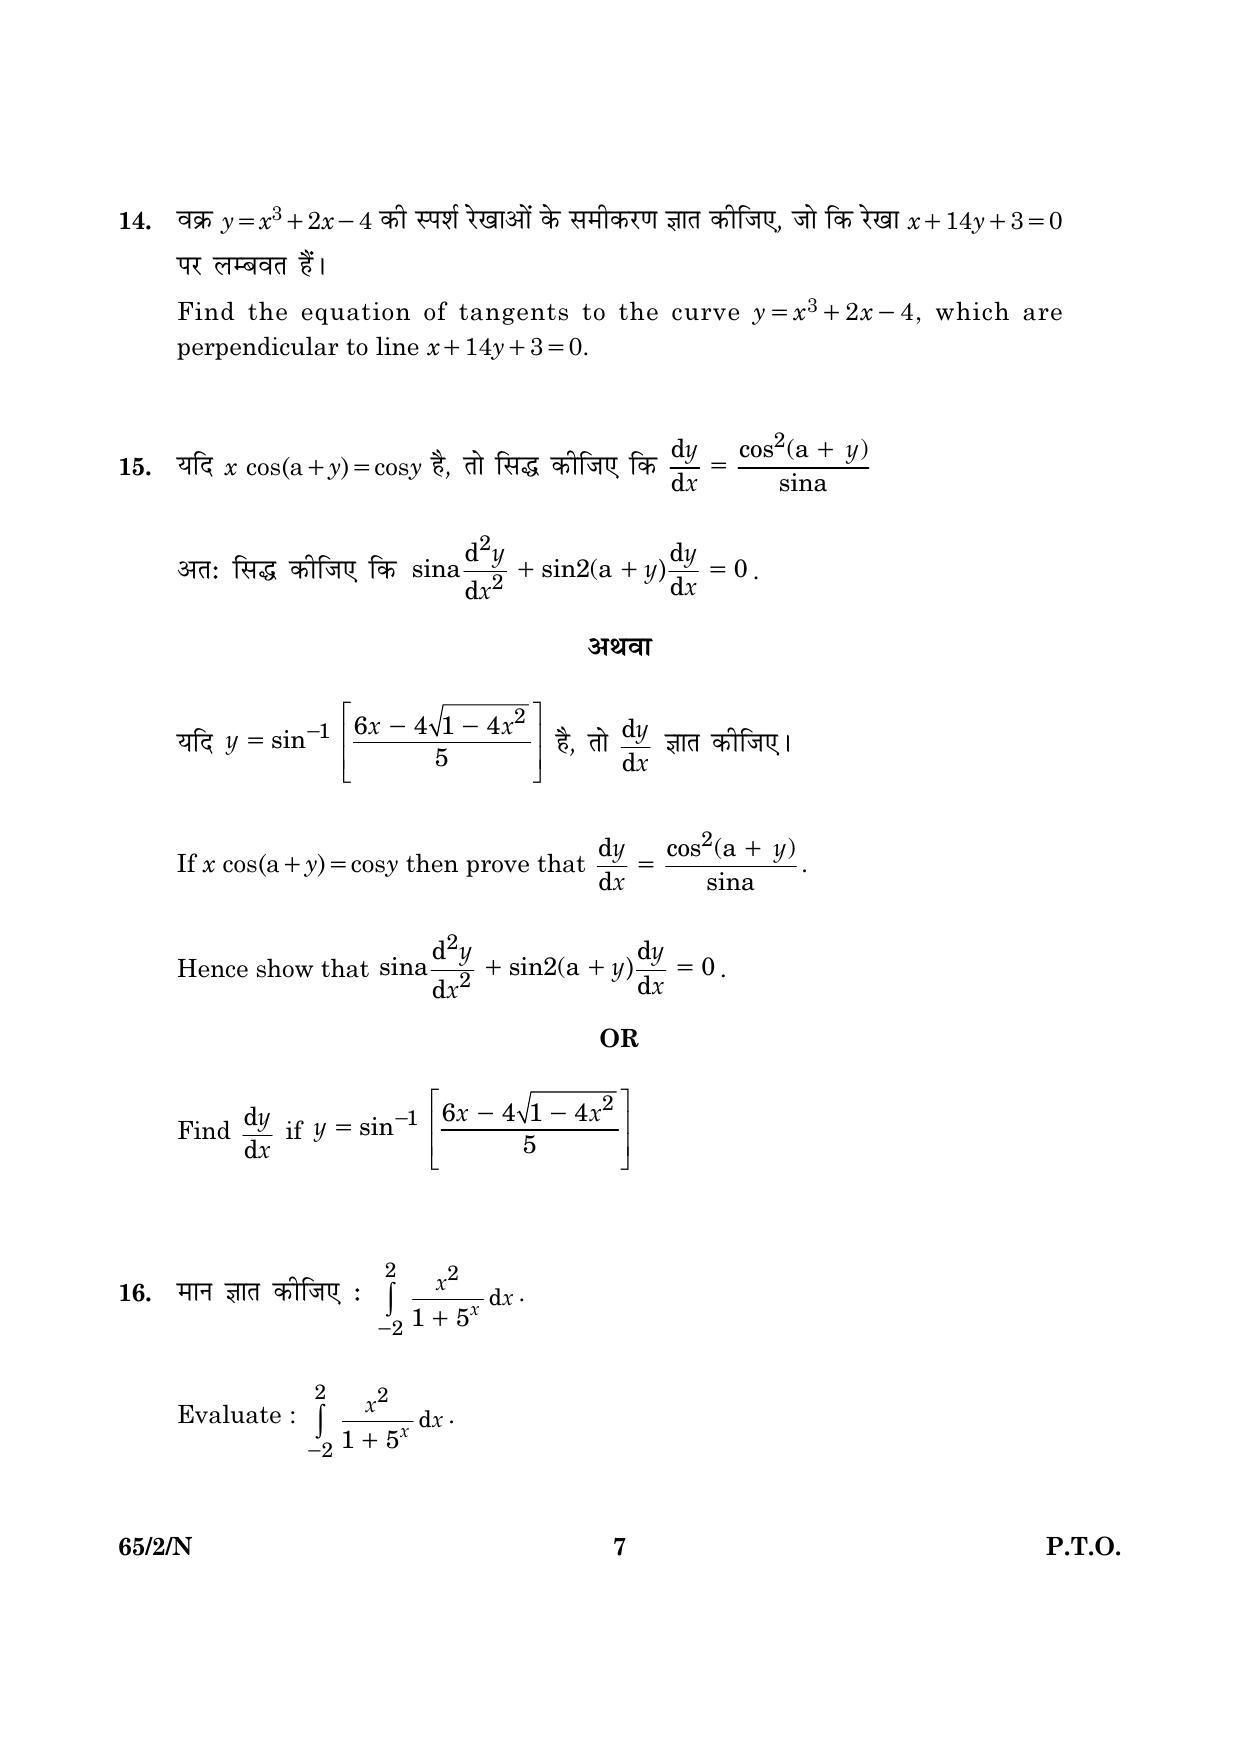 CBSE Class 12 065 Set 2 N Mathematics 2016 Question Paper - Page 7